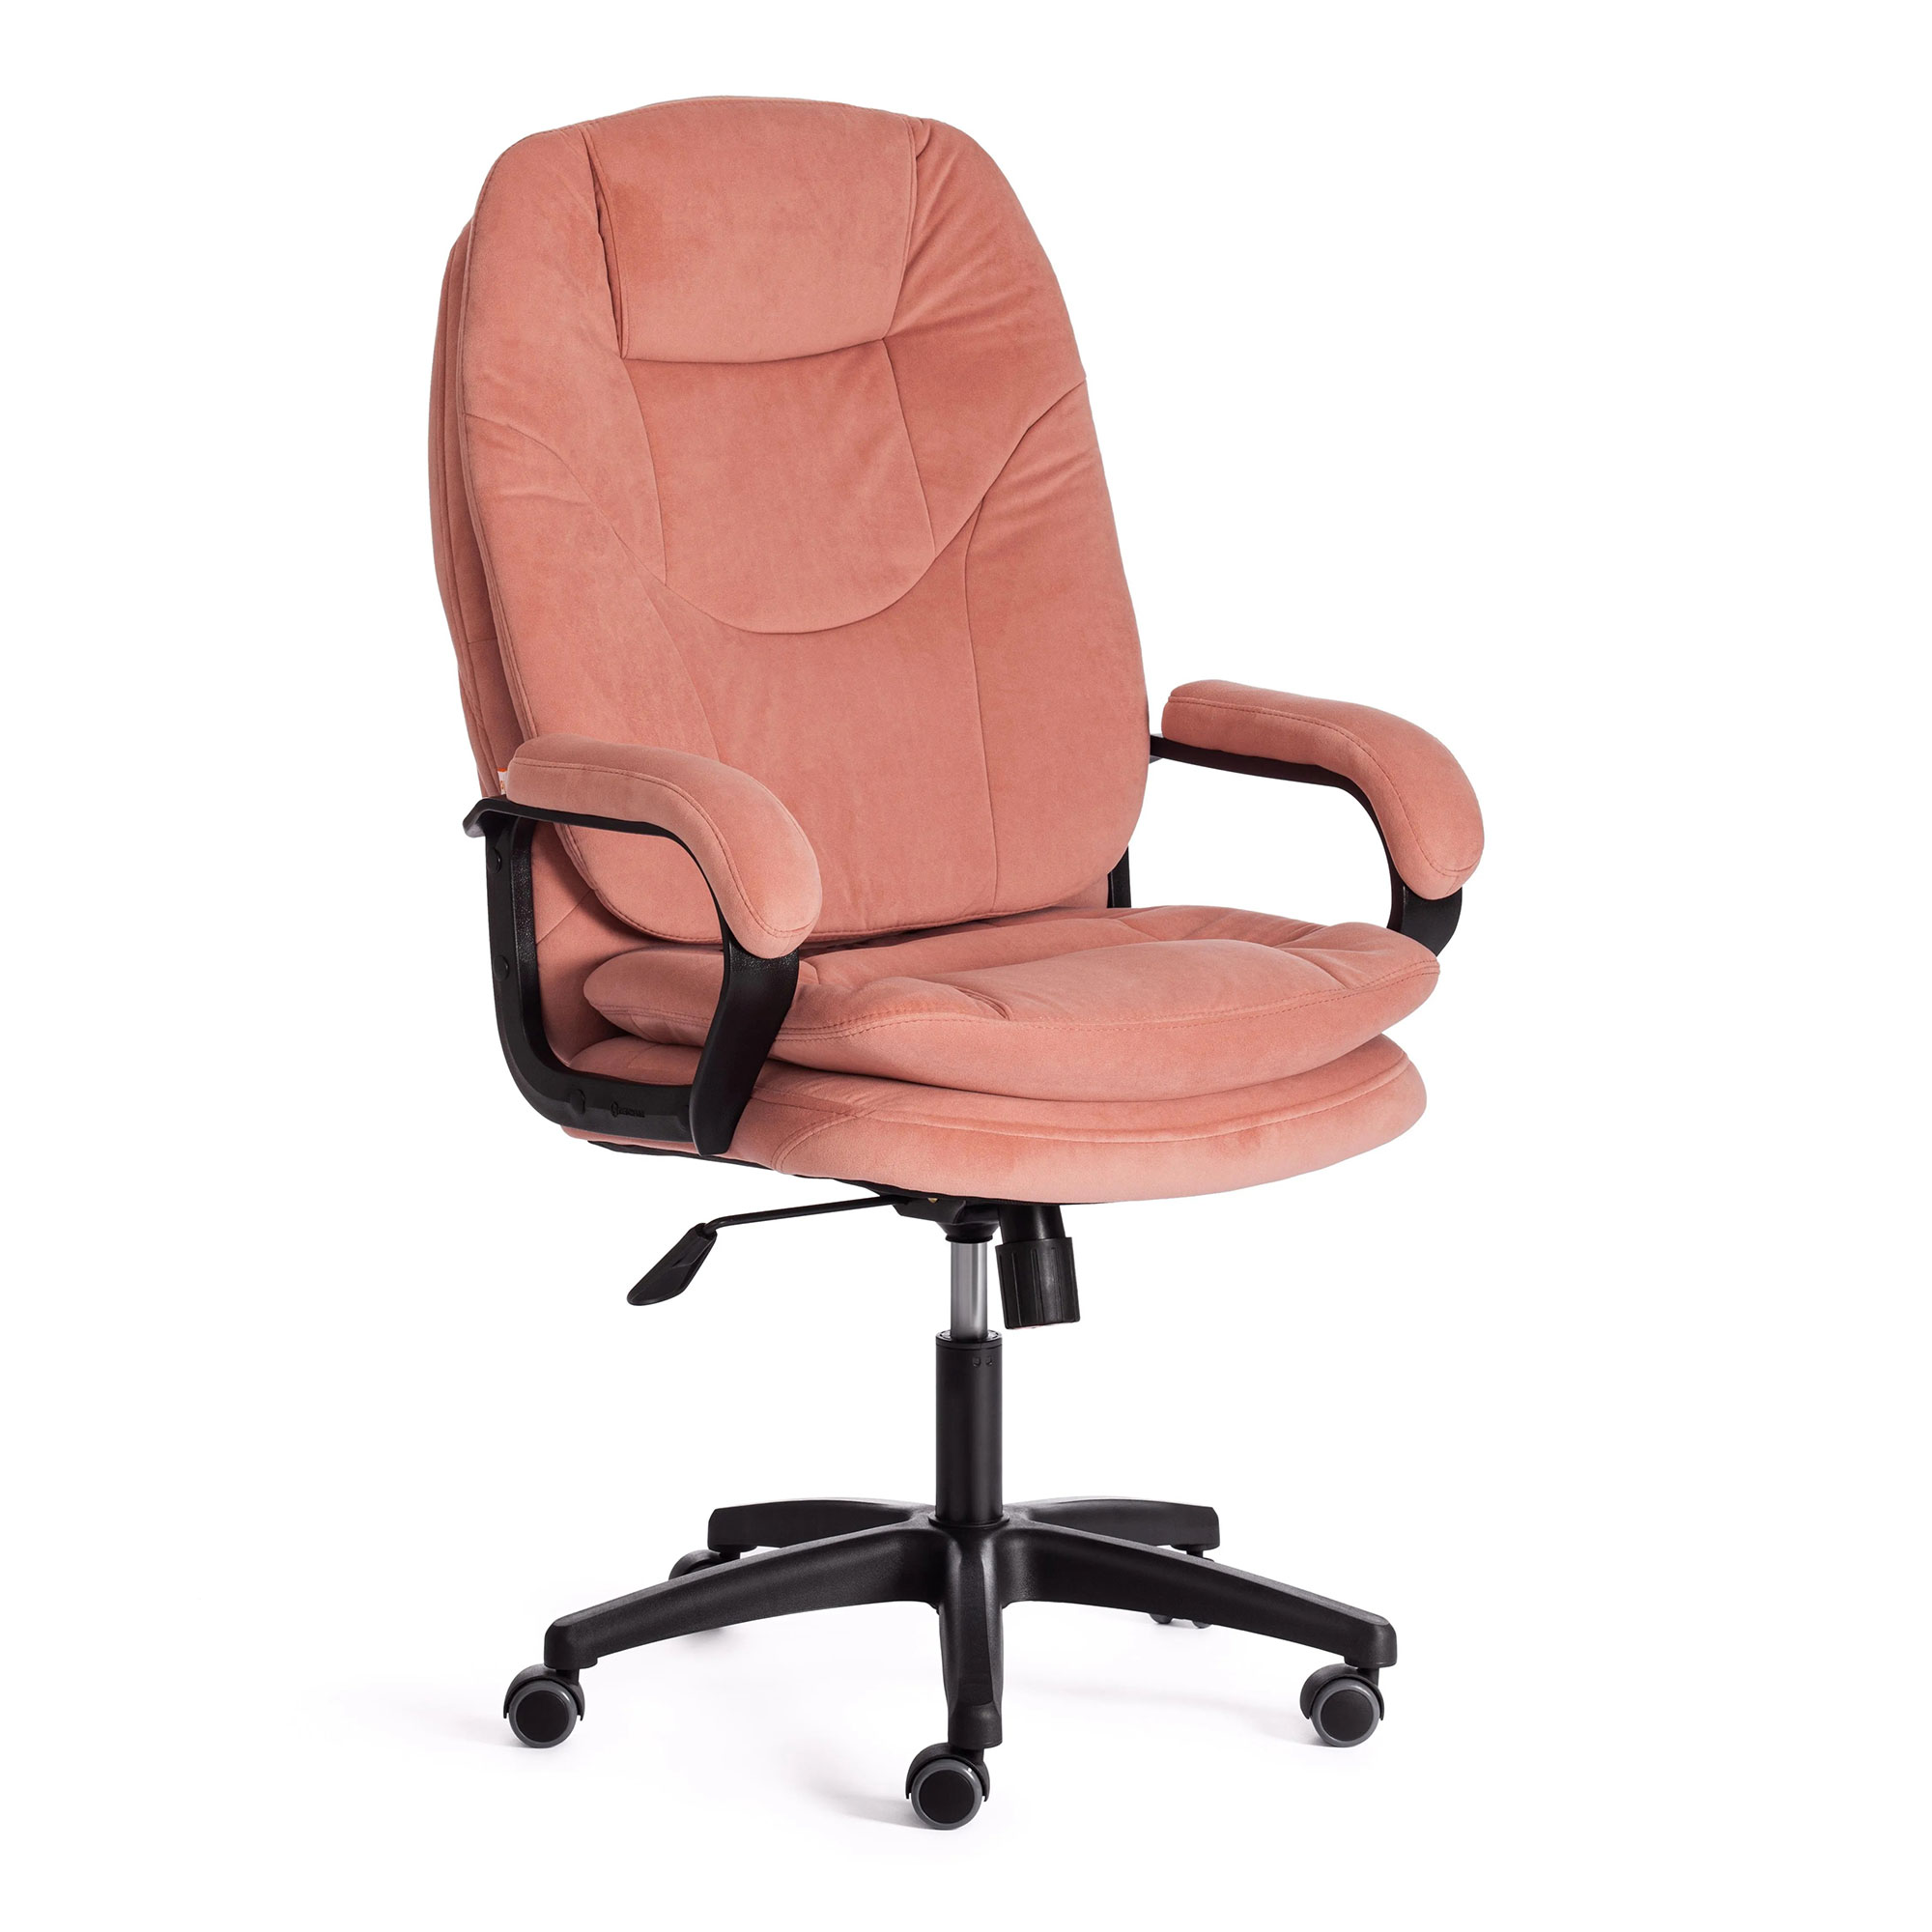 компьютерное кресло tc comfort розовое 66х46х133 см 19385 Компьютерное кресло TC Comfort розовое 66х46х133 см (19385)